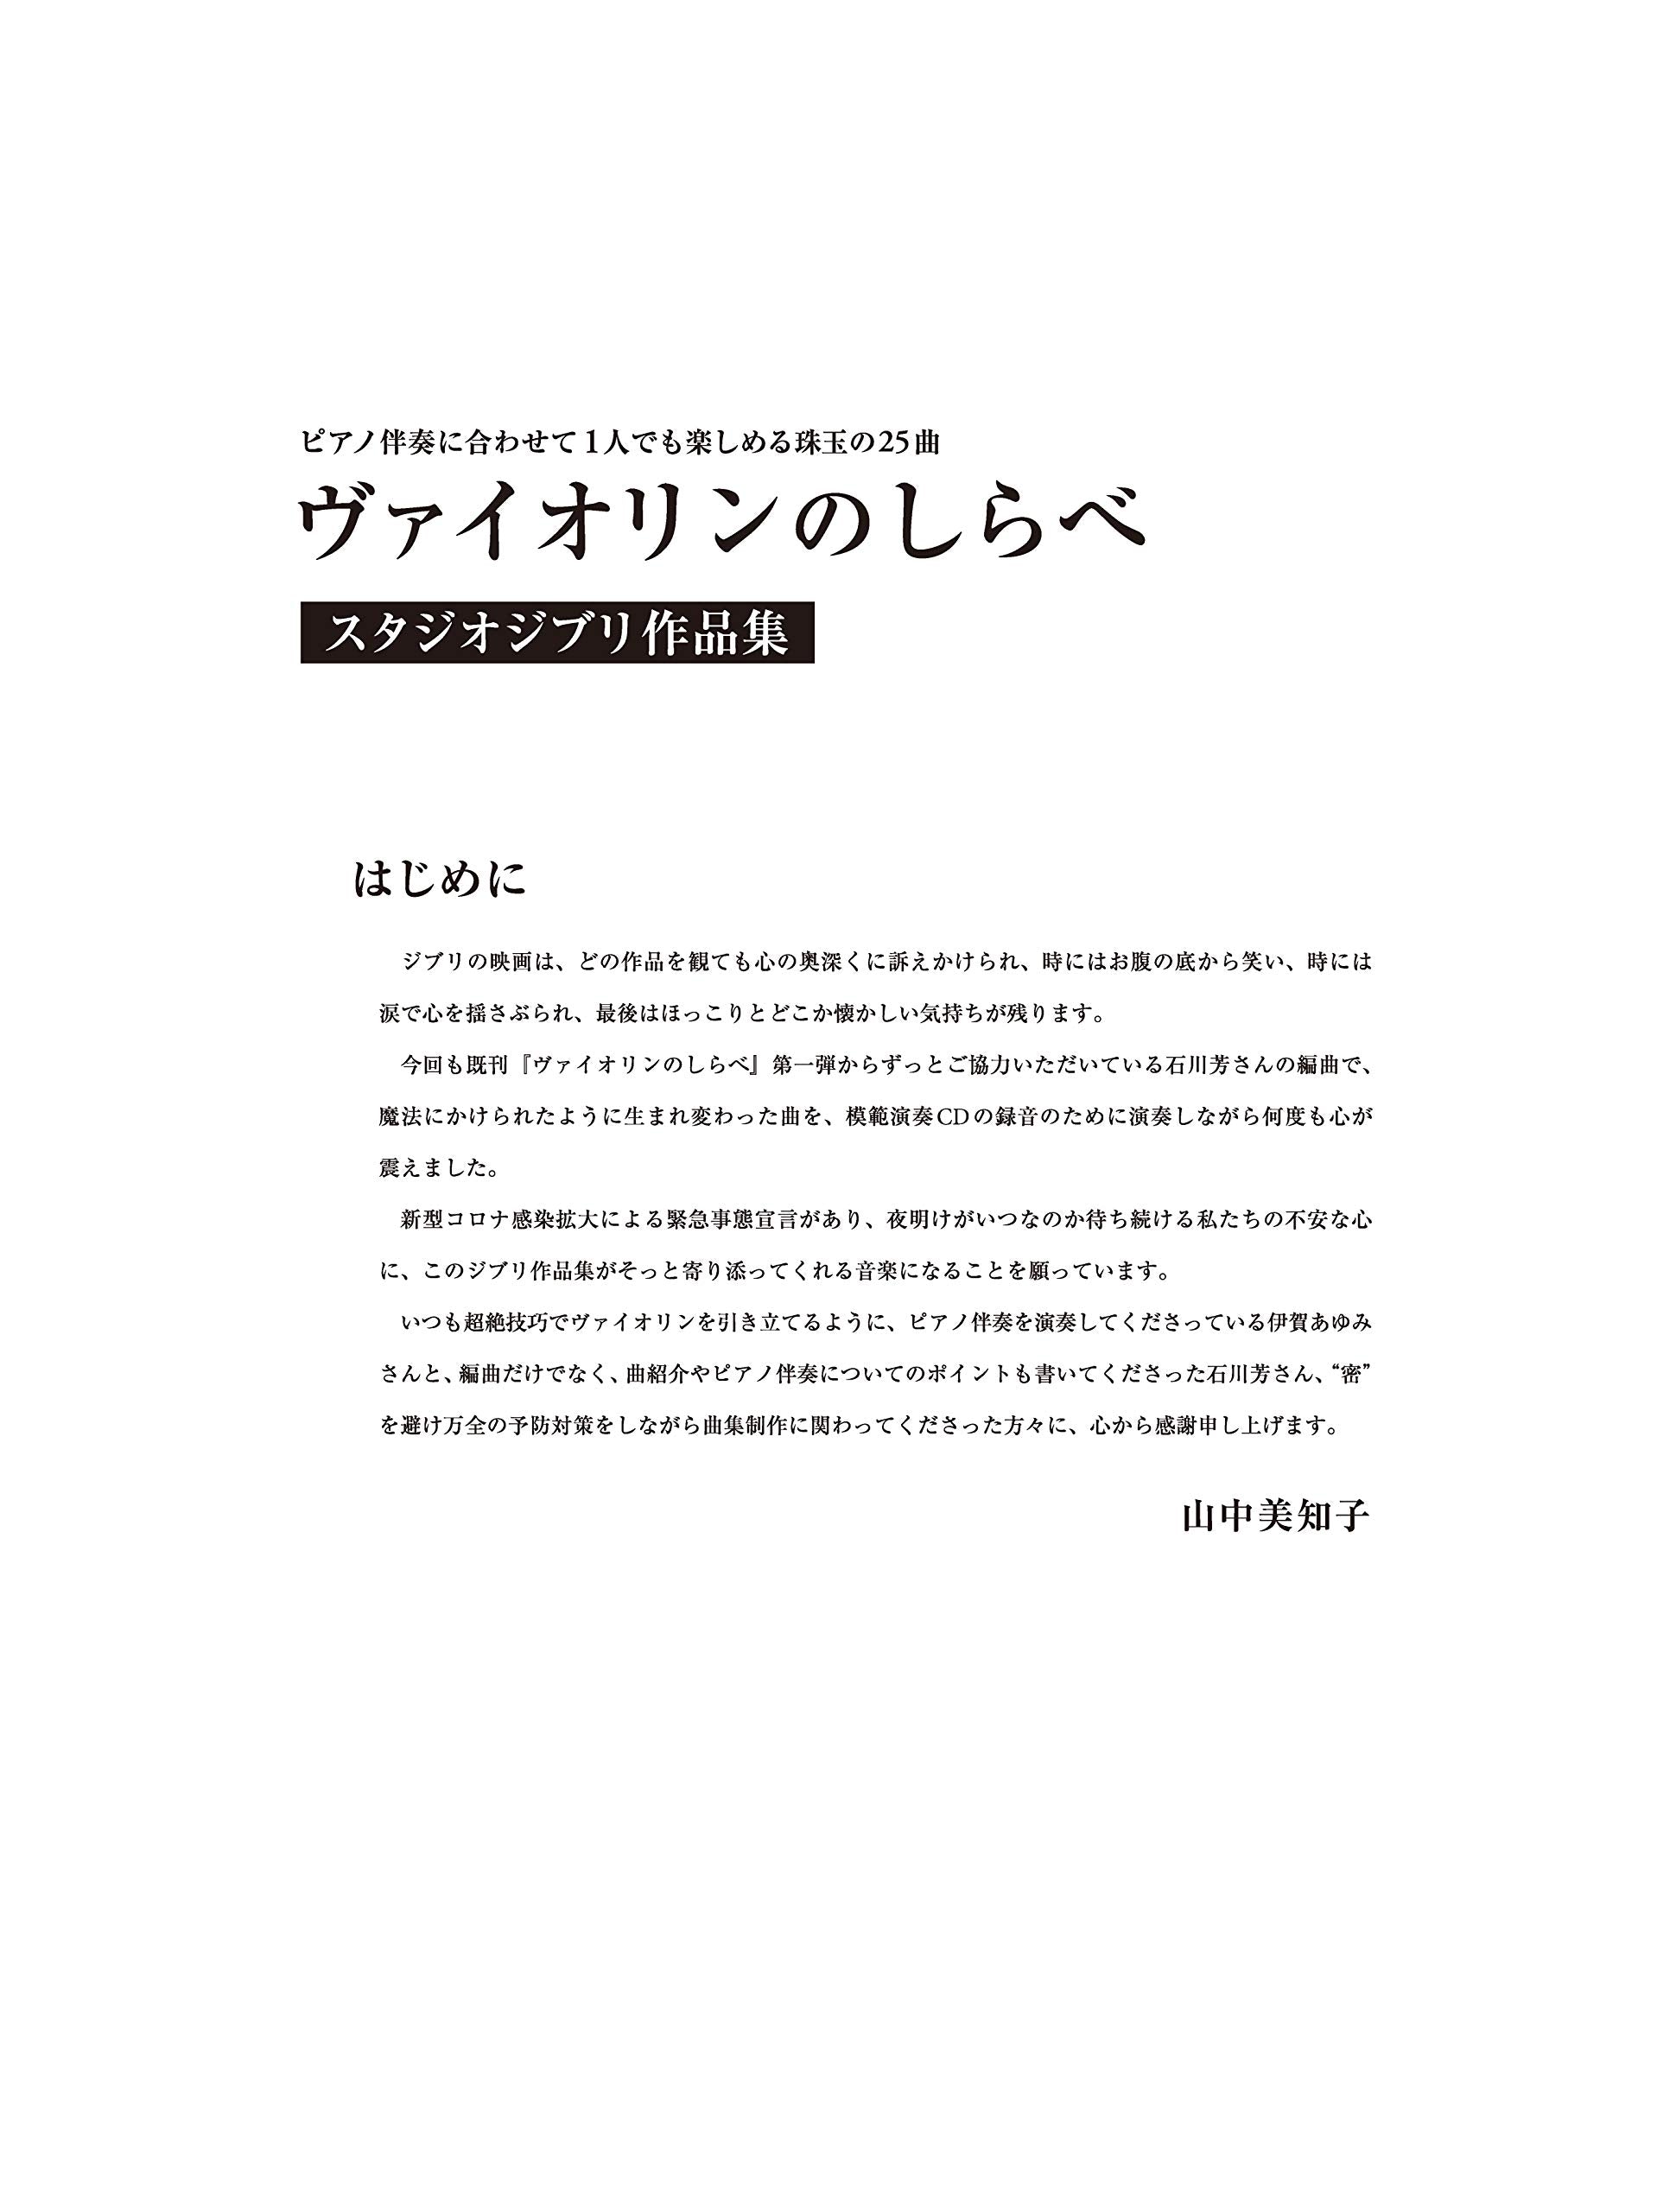 Studio Ghibli Collection for Violin and Piano w/CD